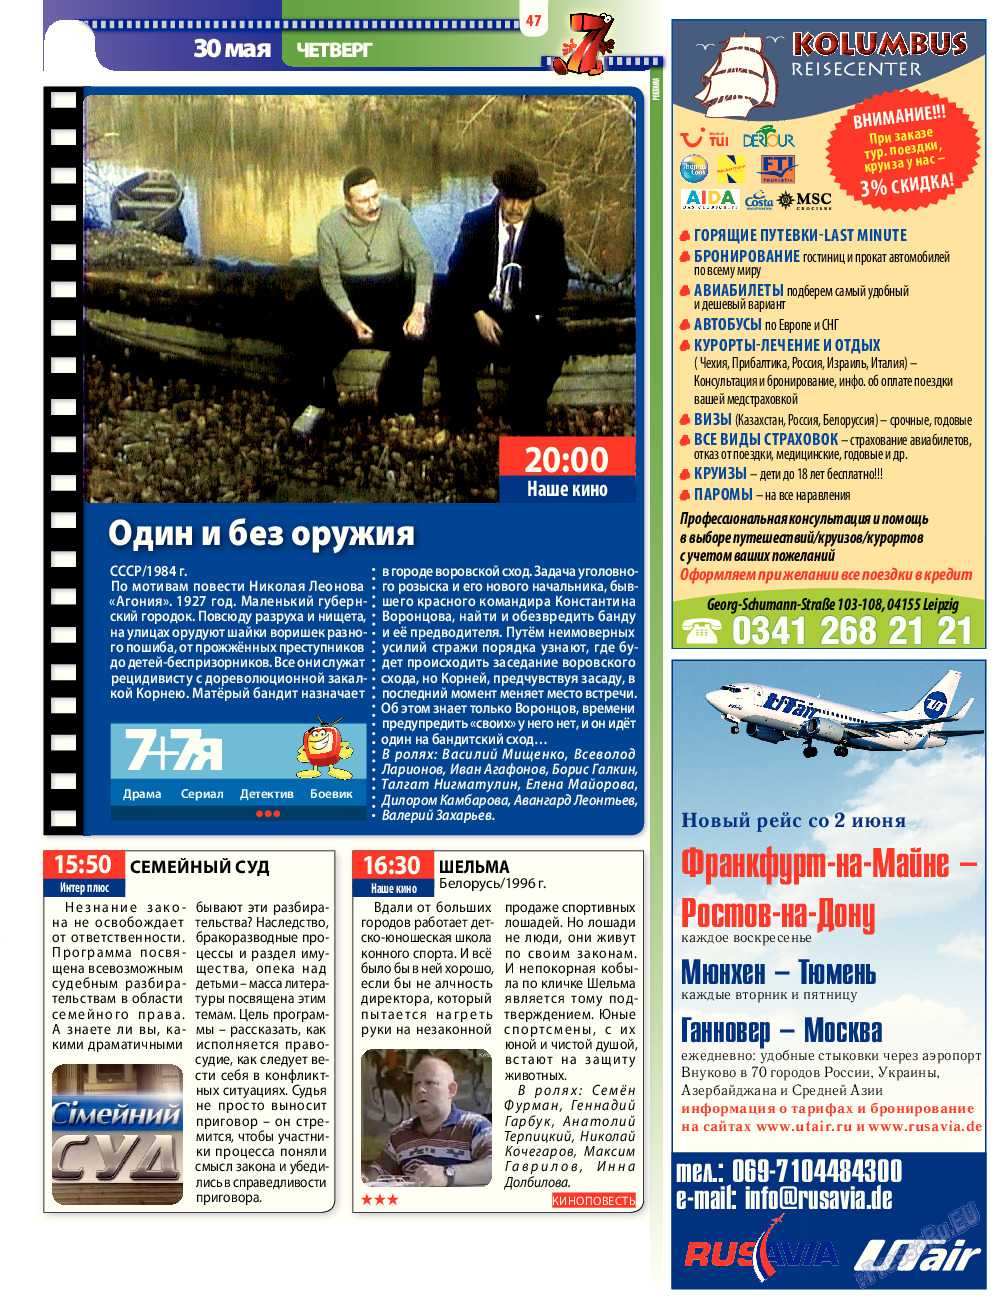 7плюс7я (журнал). 2013 год, номер 21, стр. 47